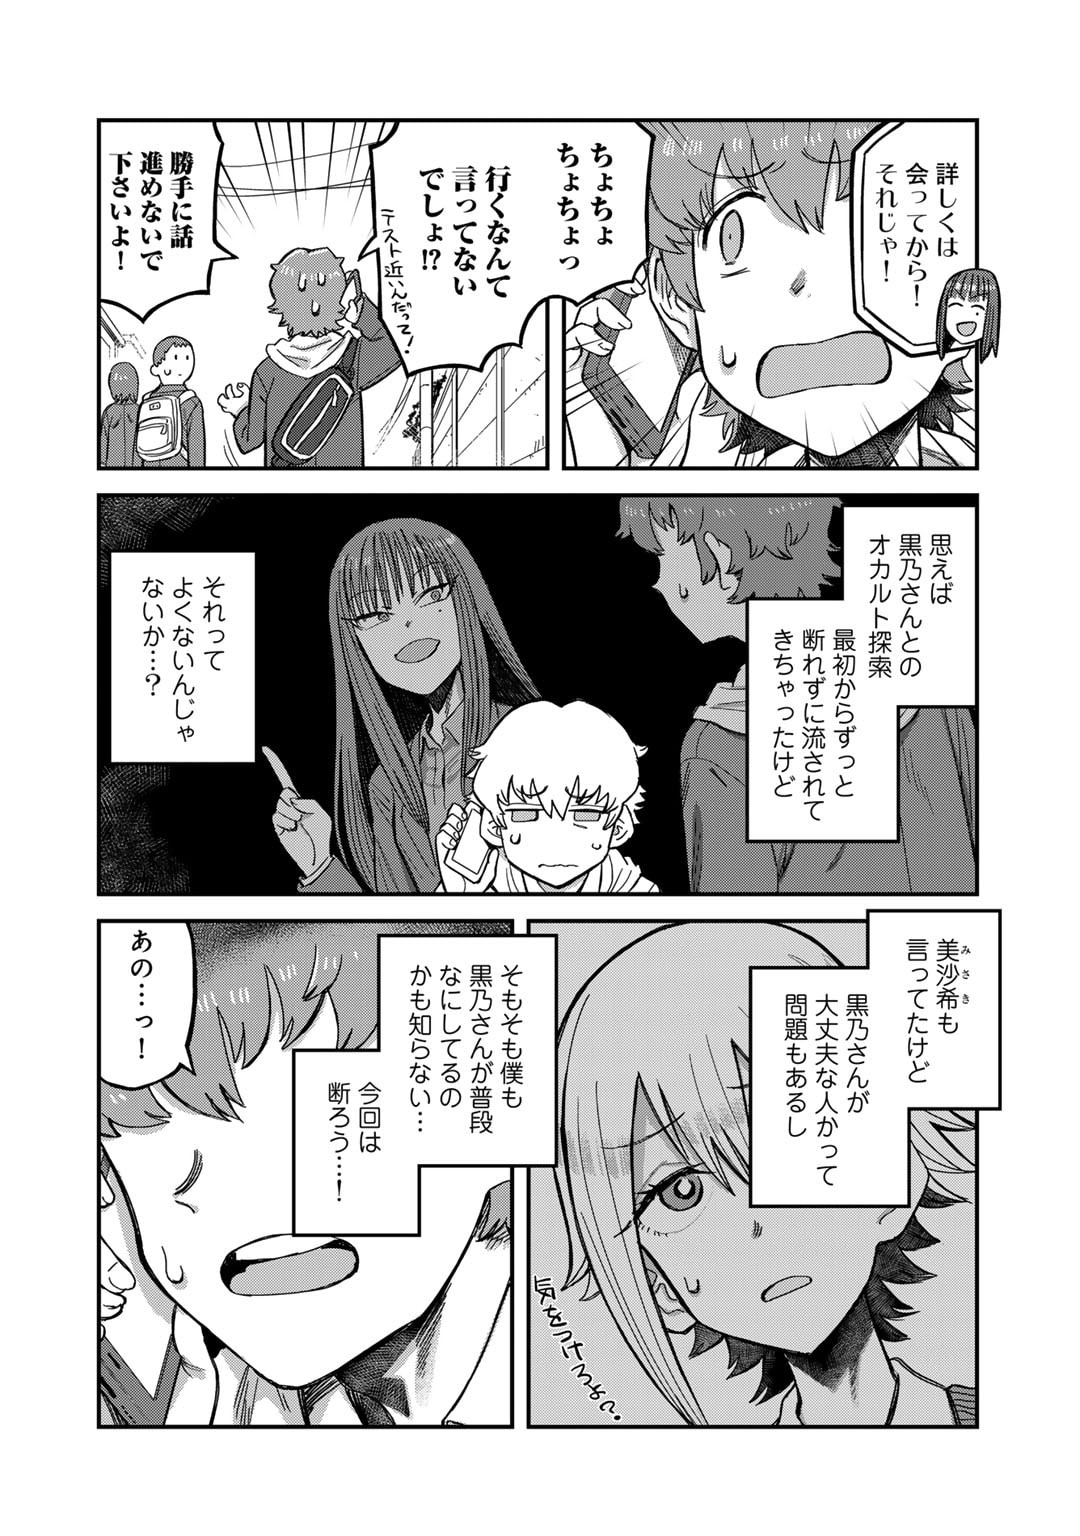 Kurono-san wa Occult ga Suki! - Chapter 5 - Page 4